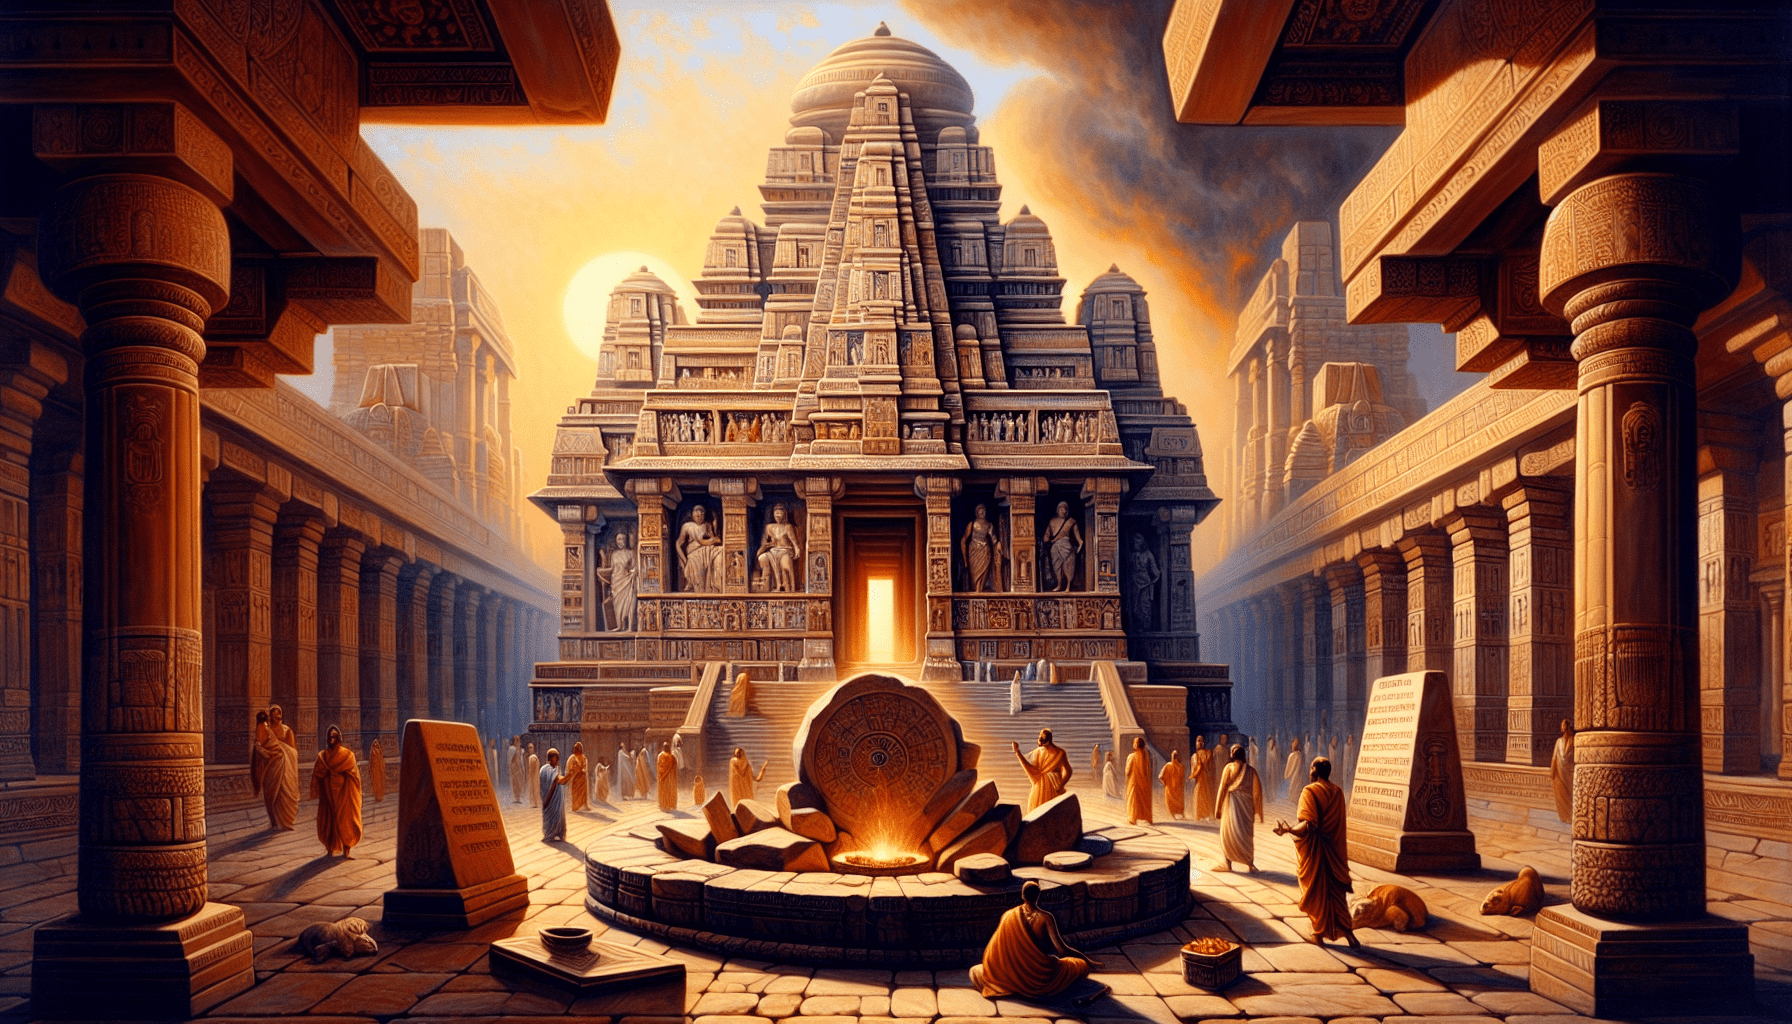 Who Built Ram Mandir First In Ayodhya?